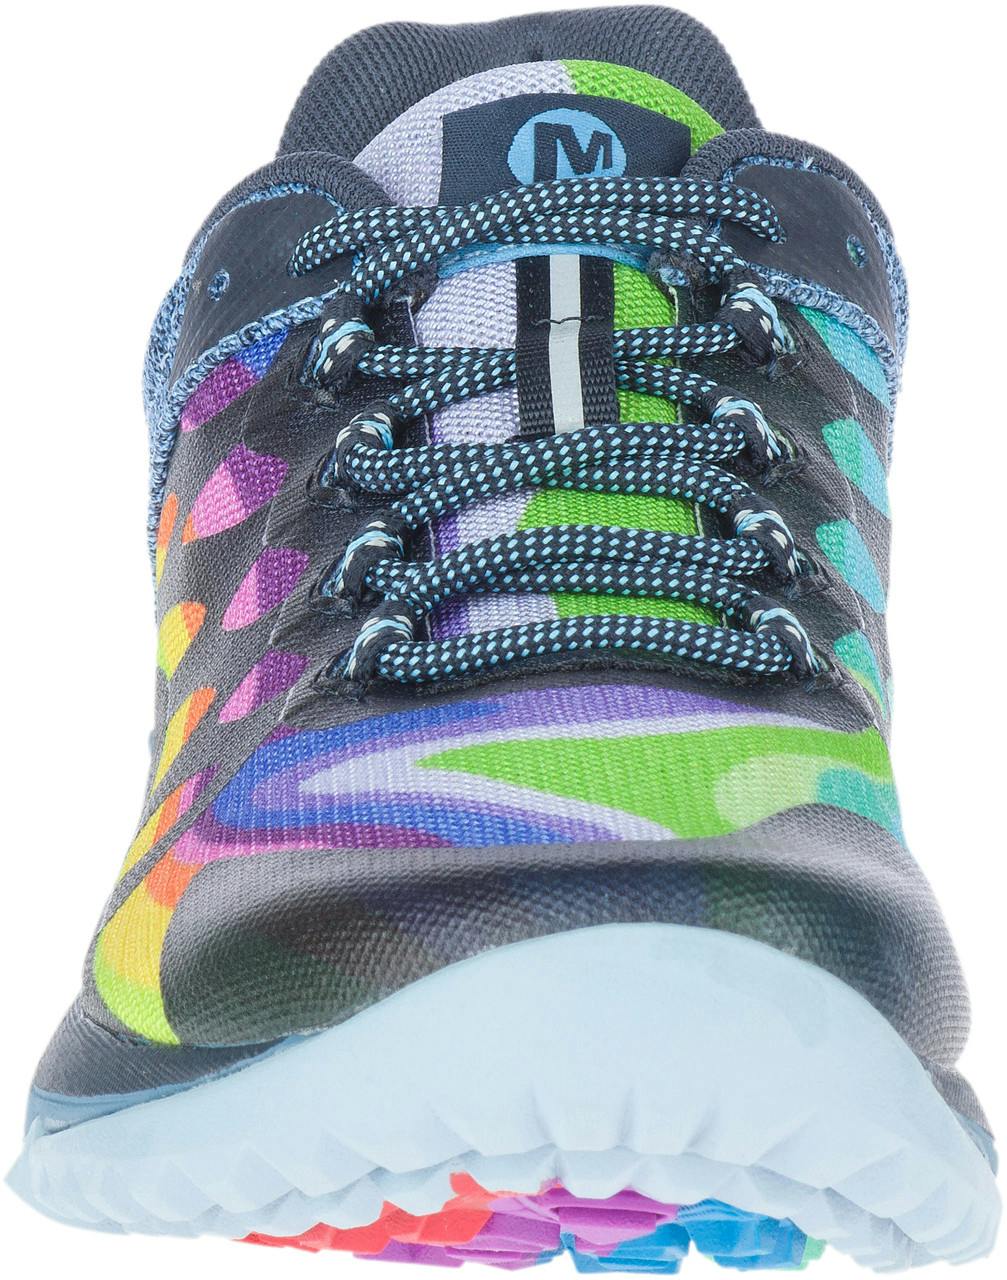 Antora 2 Trail Running Shoes Rainbow